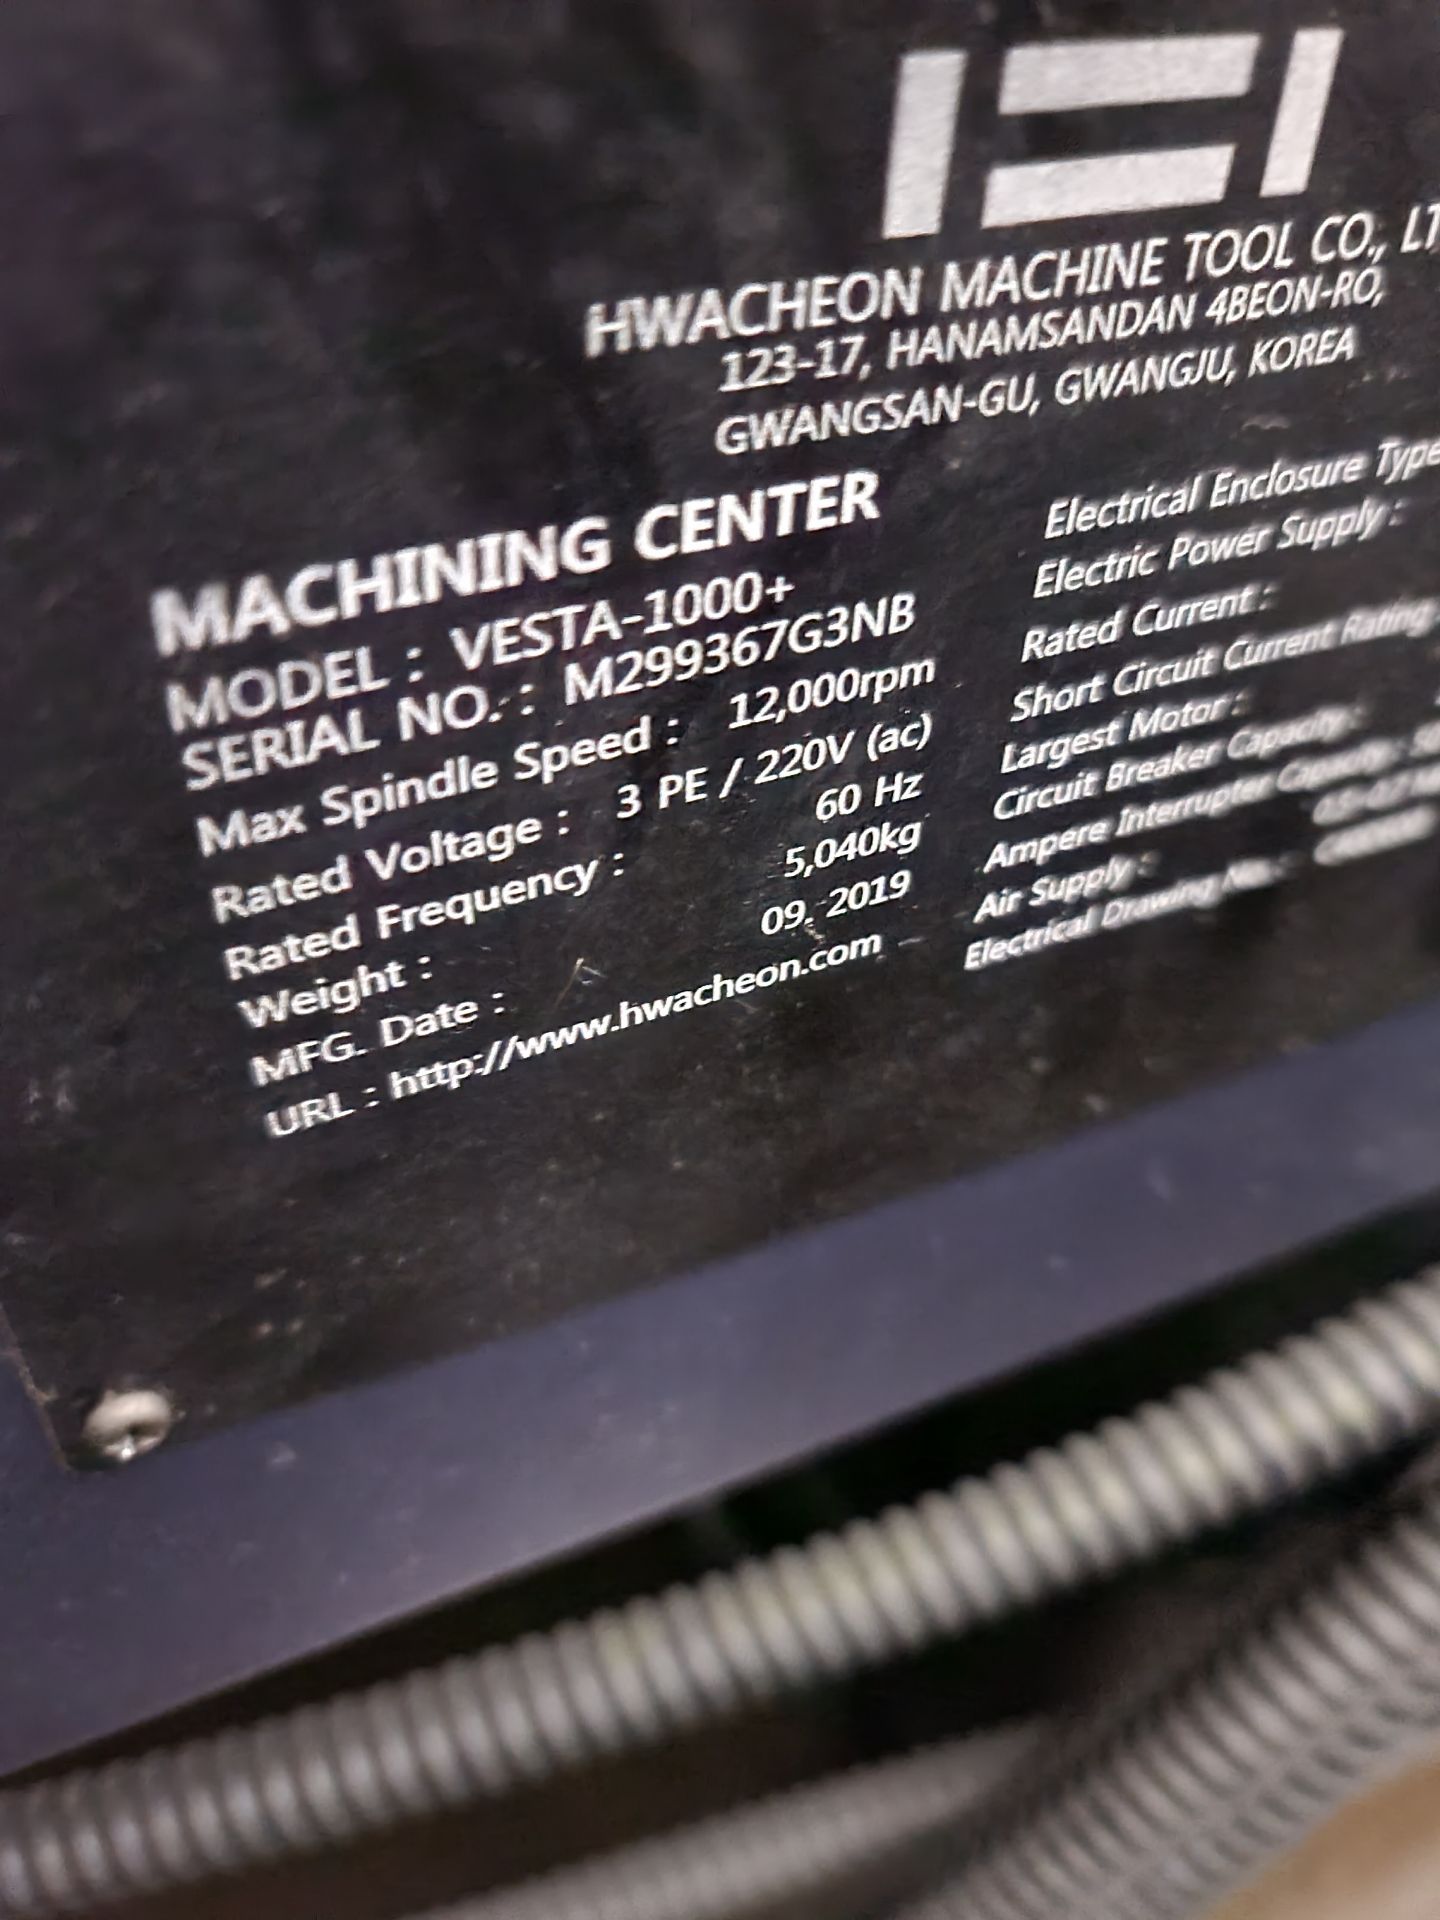 2019 HWACHEON VESTA-1000+ VERTICAL MACHINING CENTER, FANUC OI-MF SERIES CNC CONTROL, XYZ TRAVELS: - Image 18 of 18